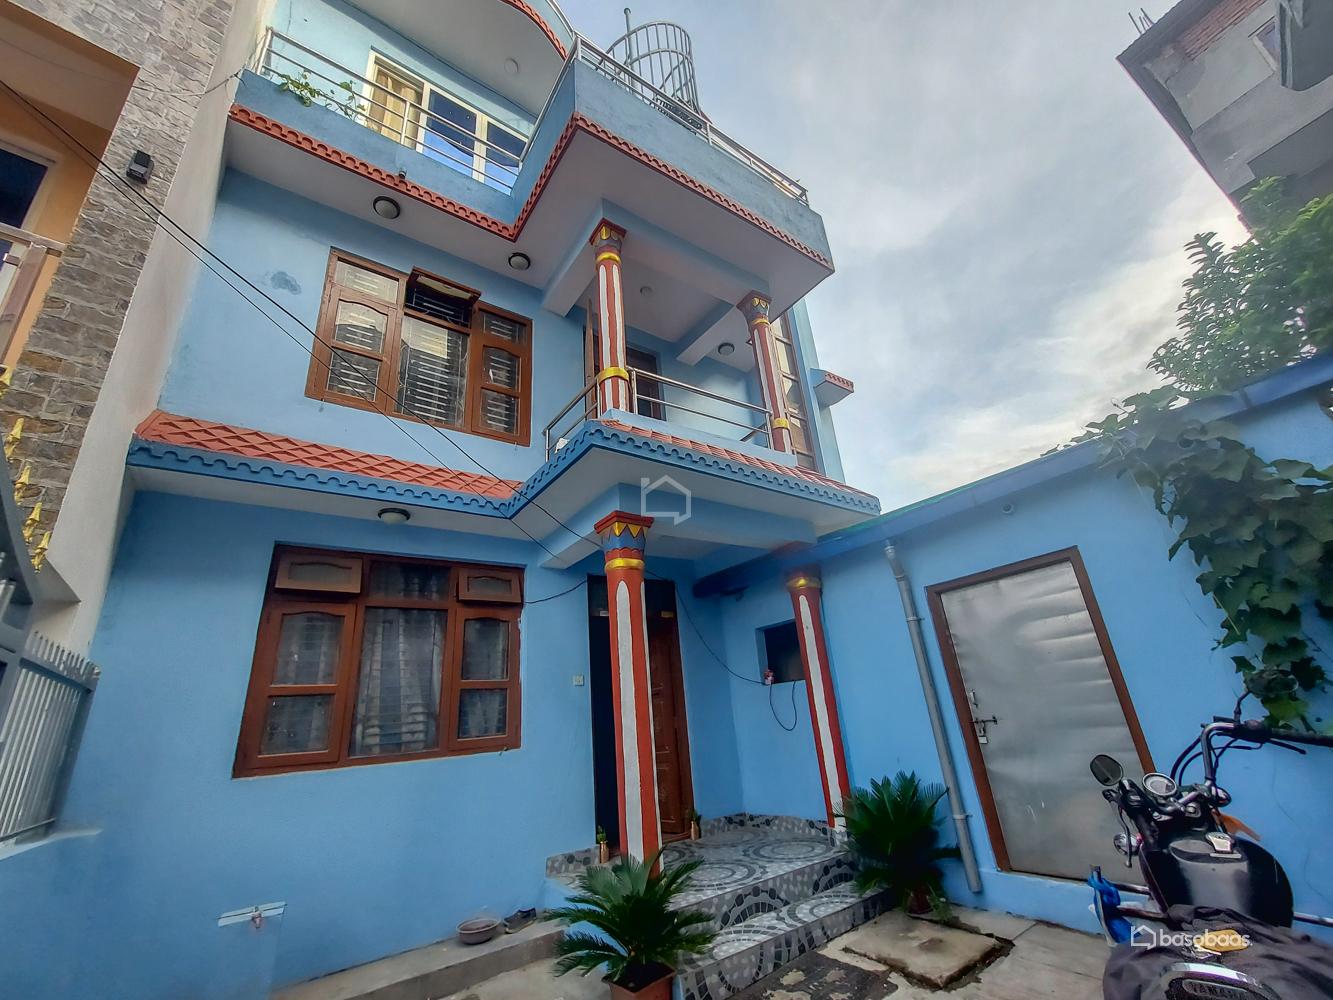 Residental : House for Sale in Suryabinayak, Bhaktapur Image 1